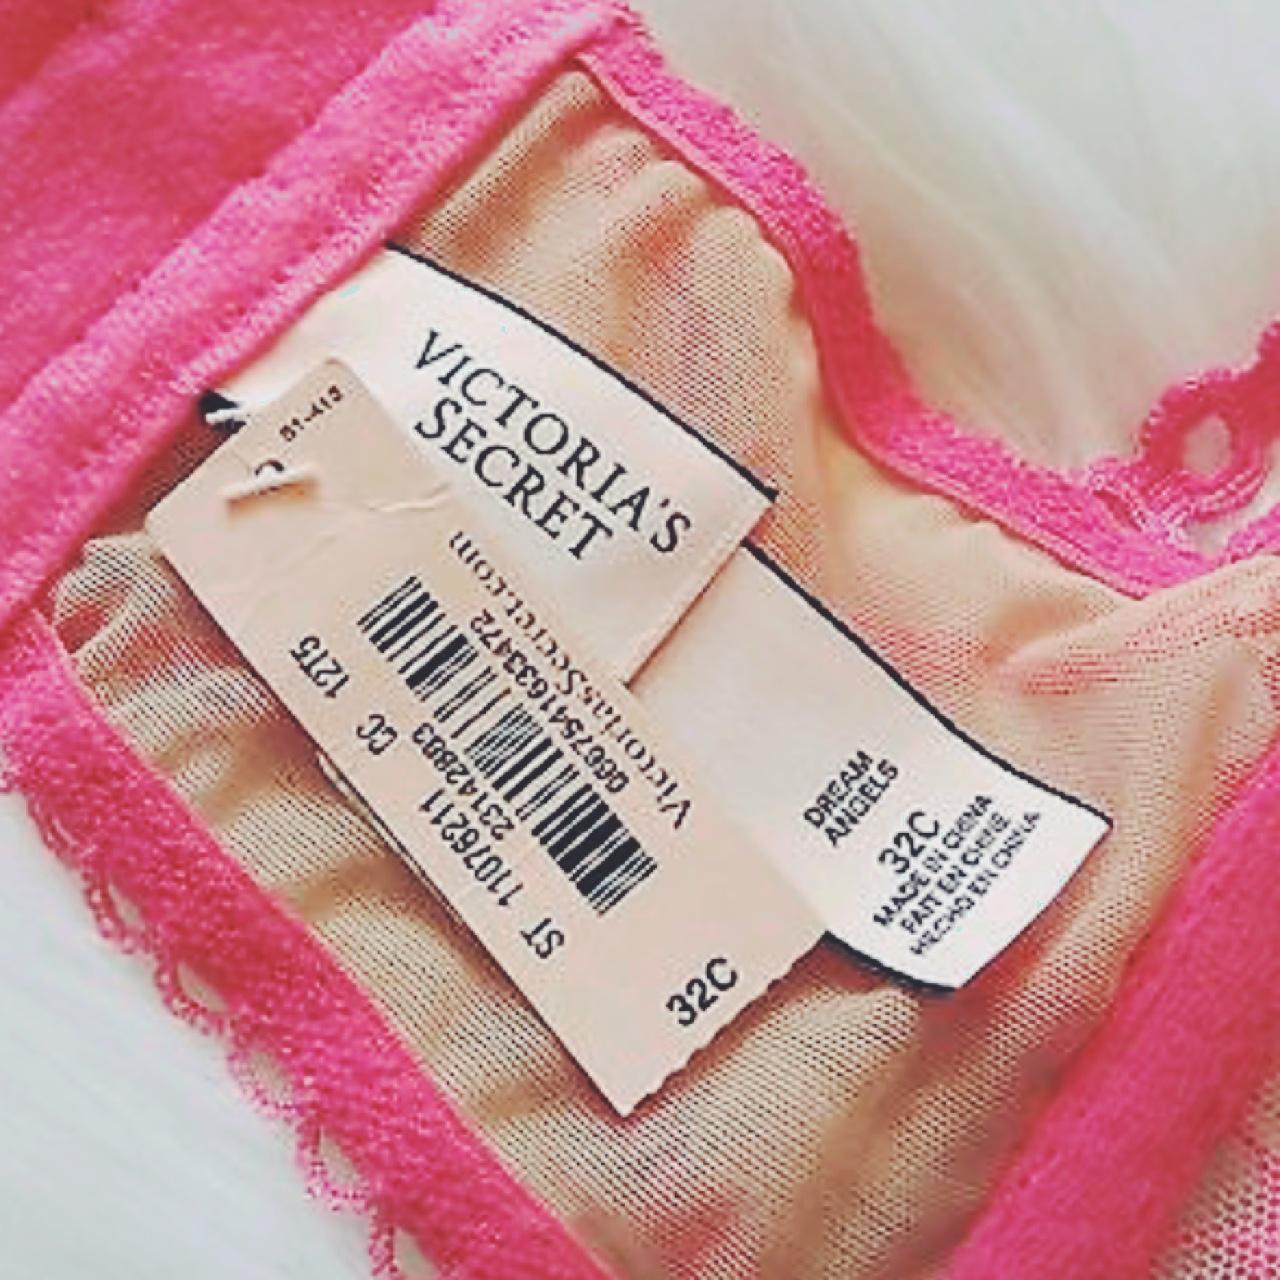 Victoria's Secret high neck embroidered bra / - Depop